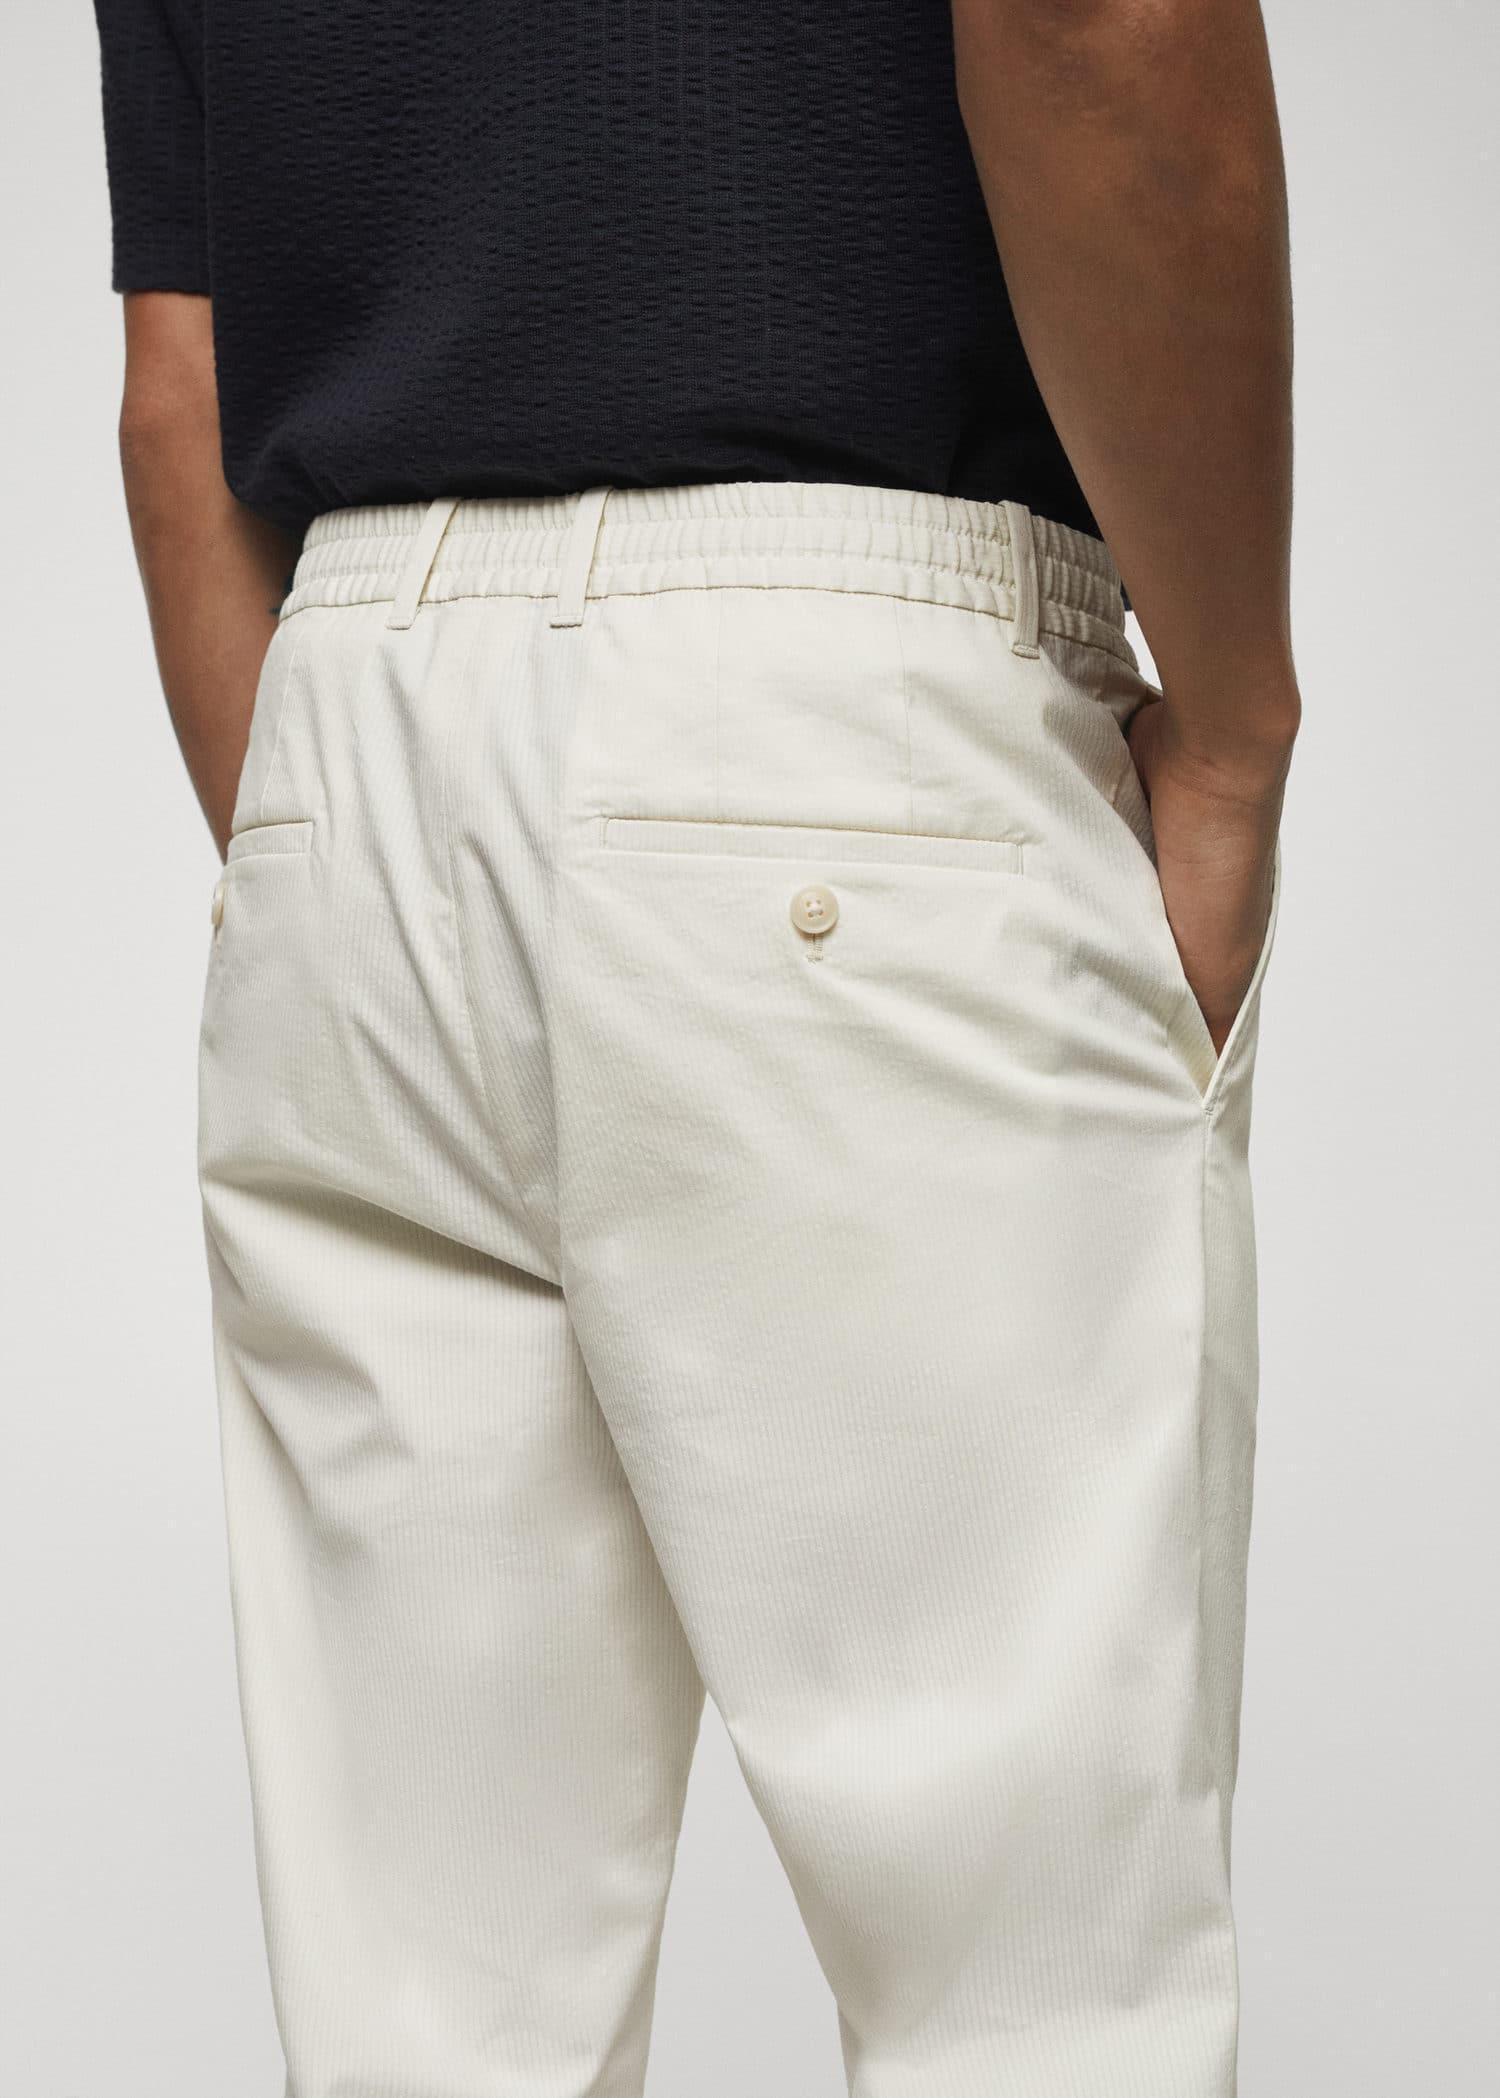 Mango - Cream Cotton Drawstring Seersucker Trousers